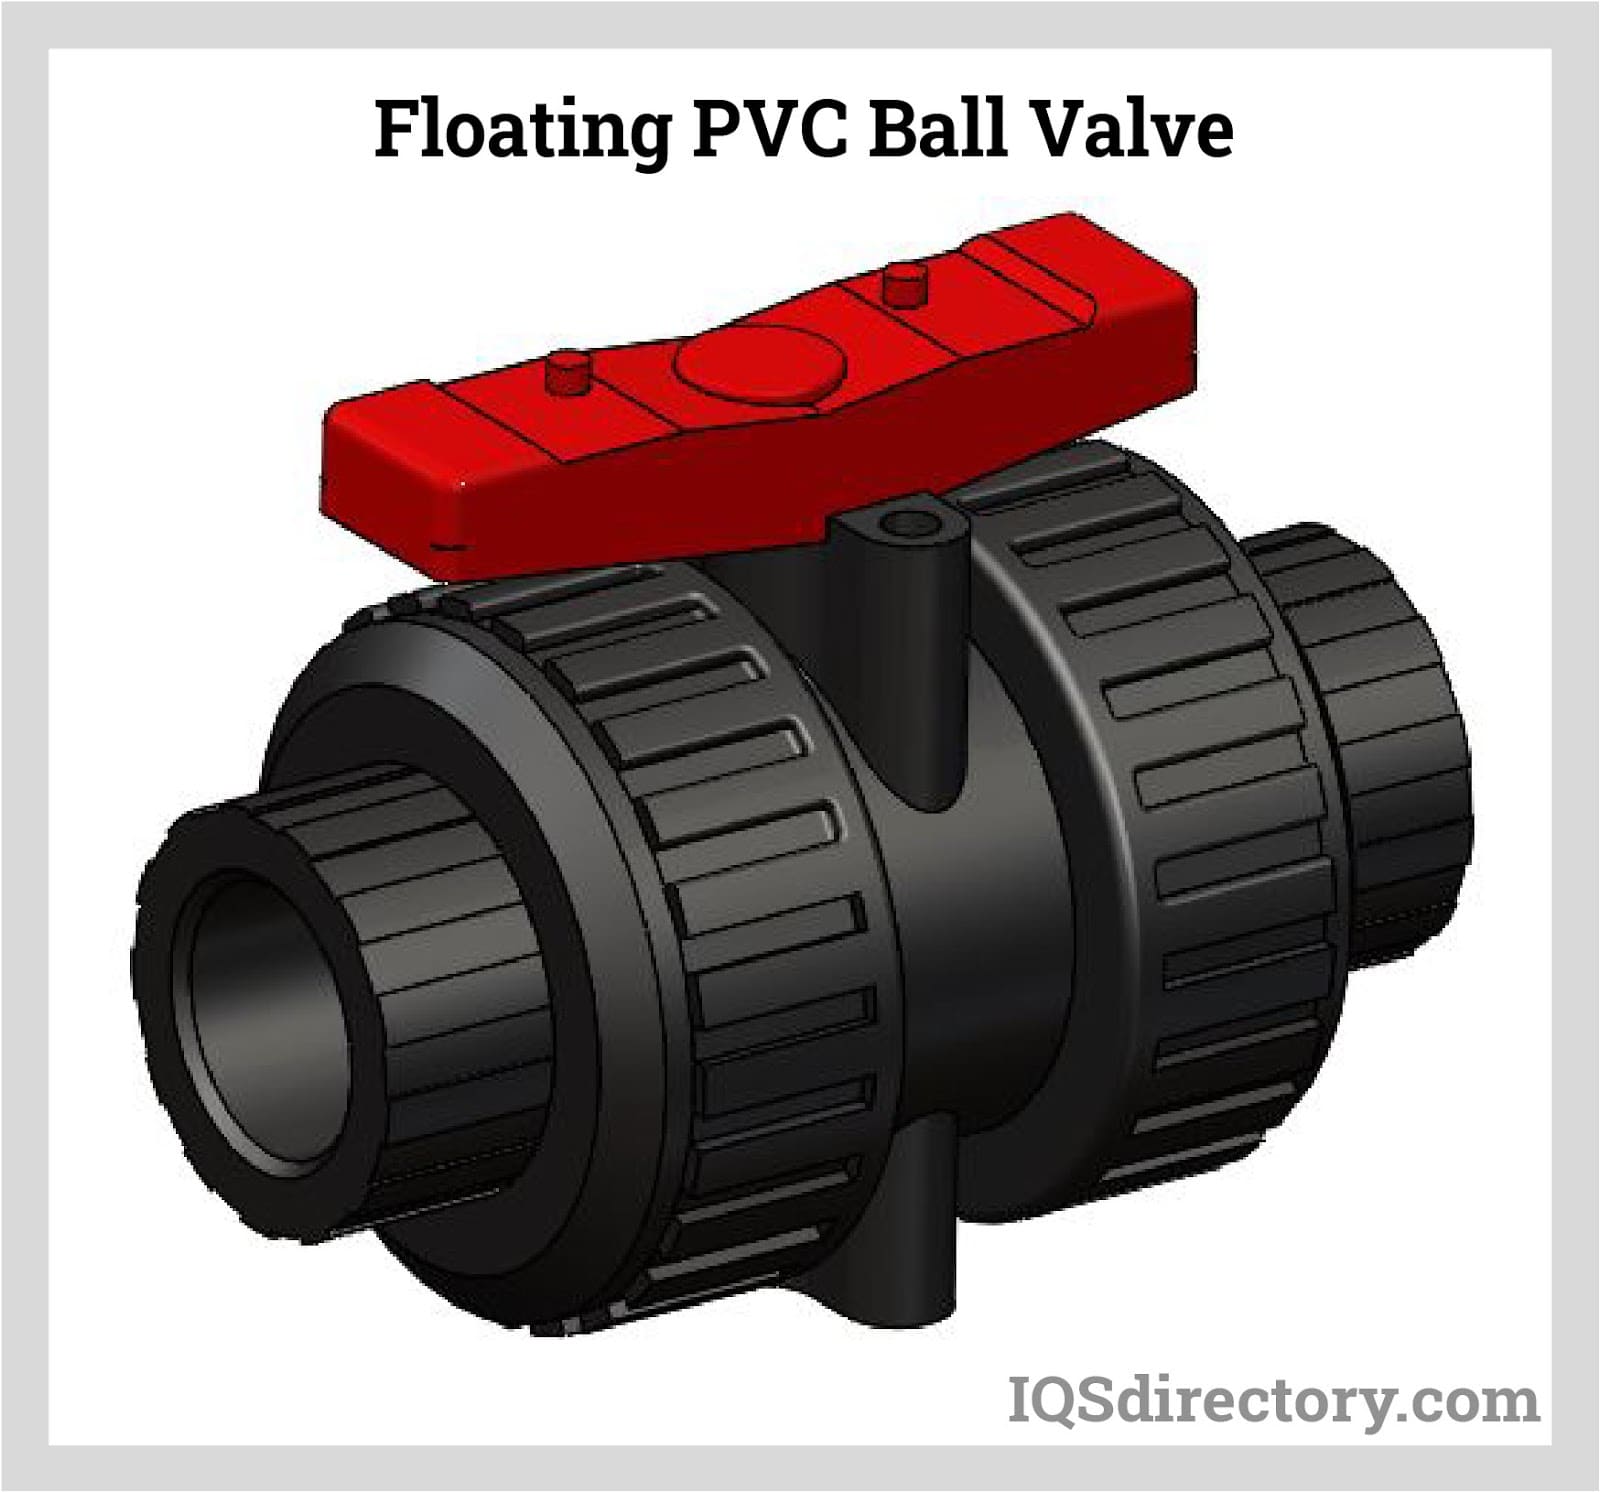 Floating PVC Ball Valve